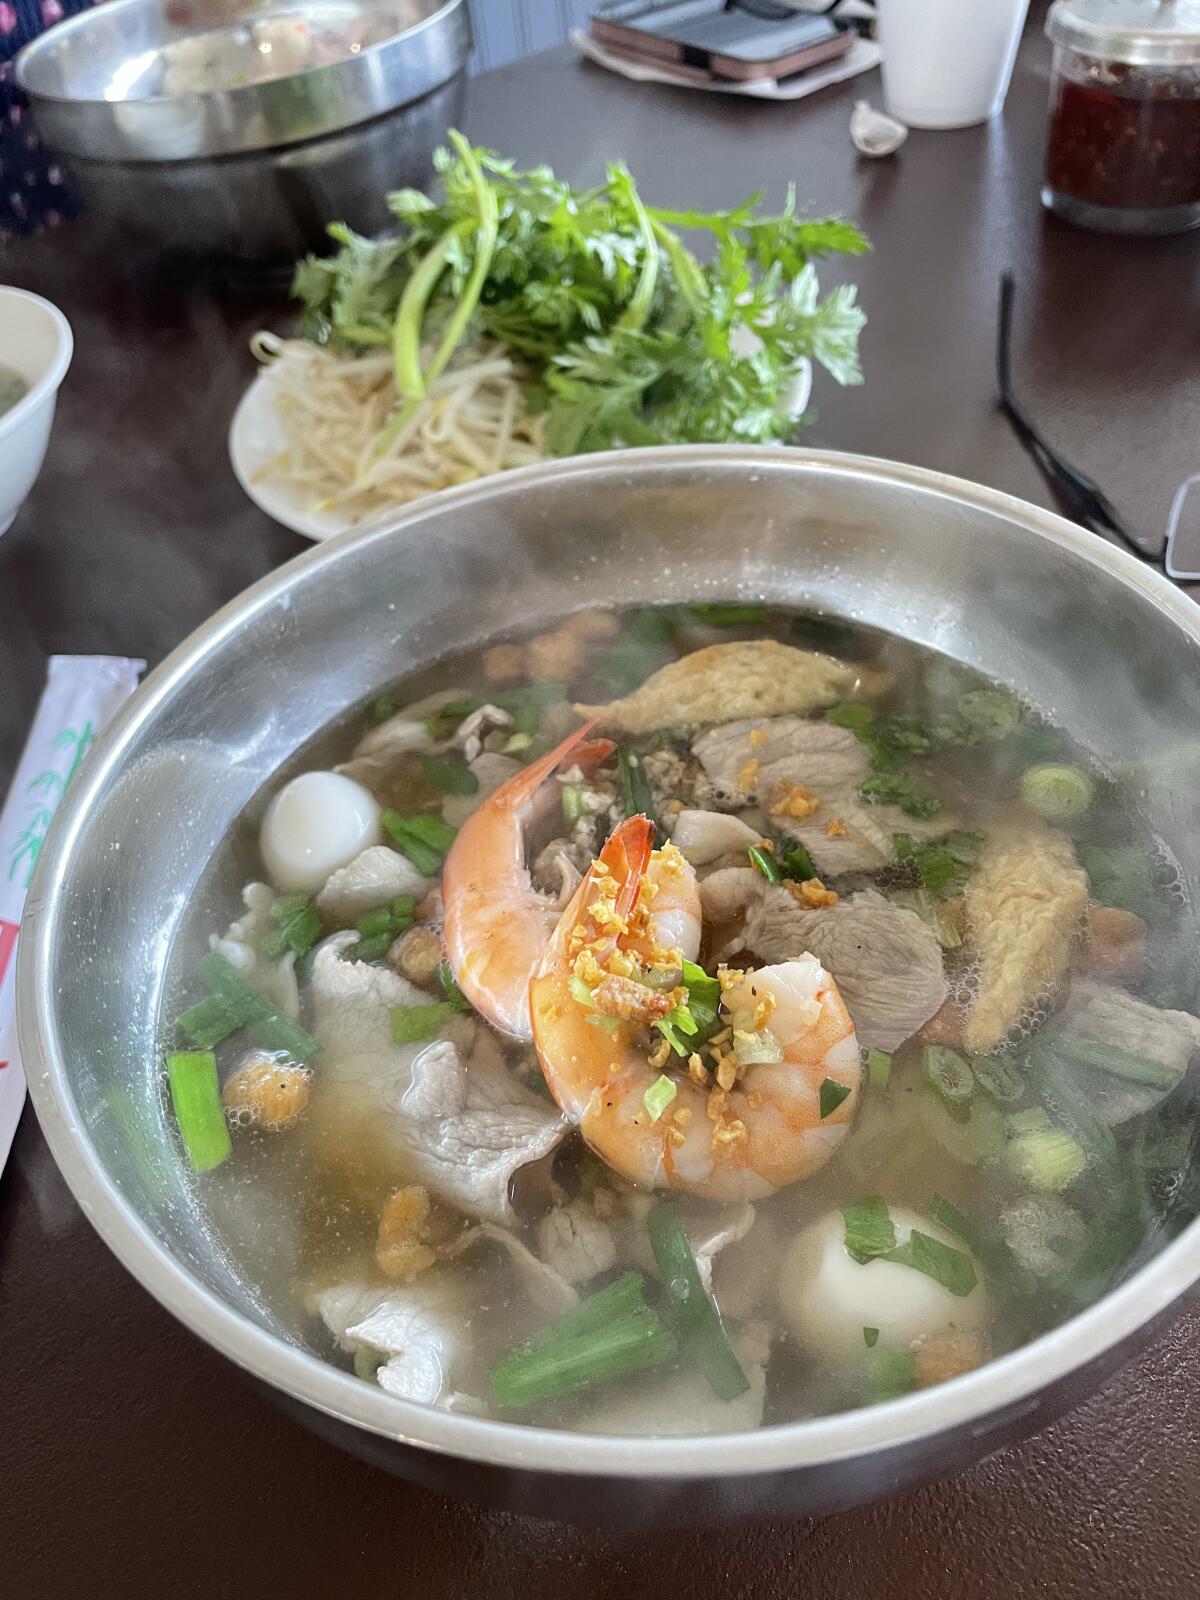 The small but popular Hu Tieu De Nhat eatery in Garden Grove is a highly rated spot for hu tieu nam vang.